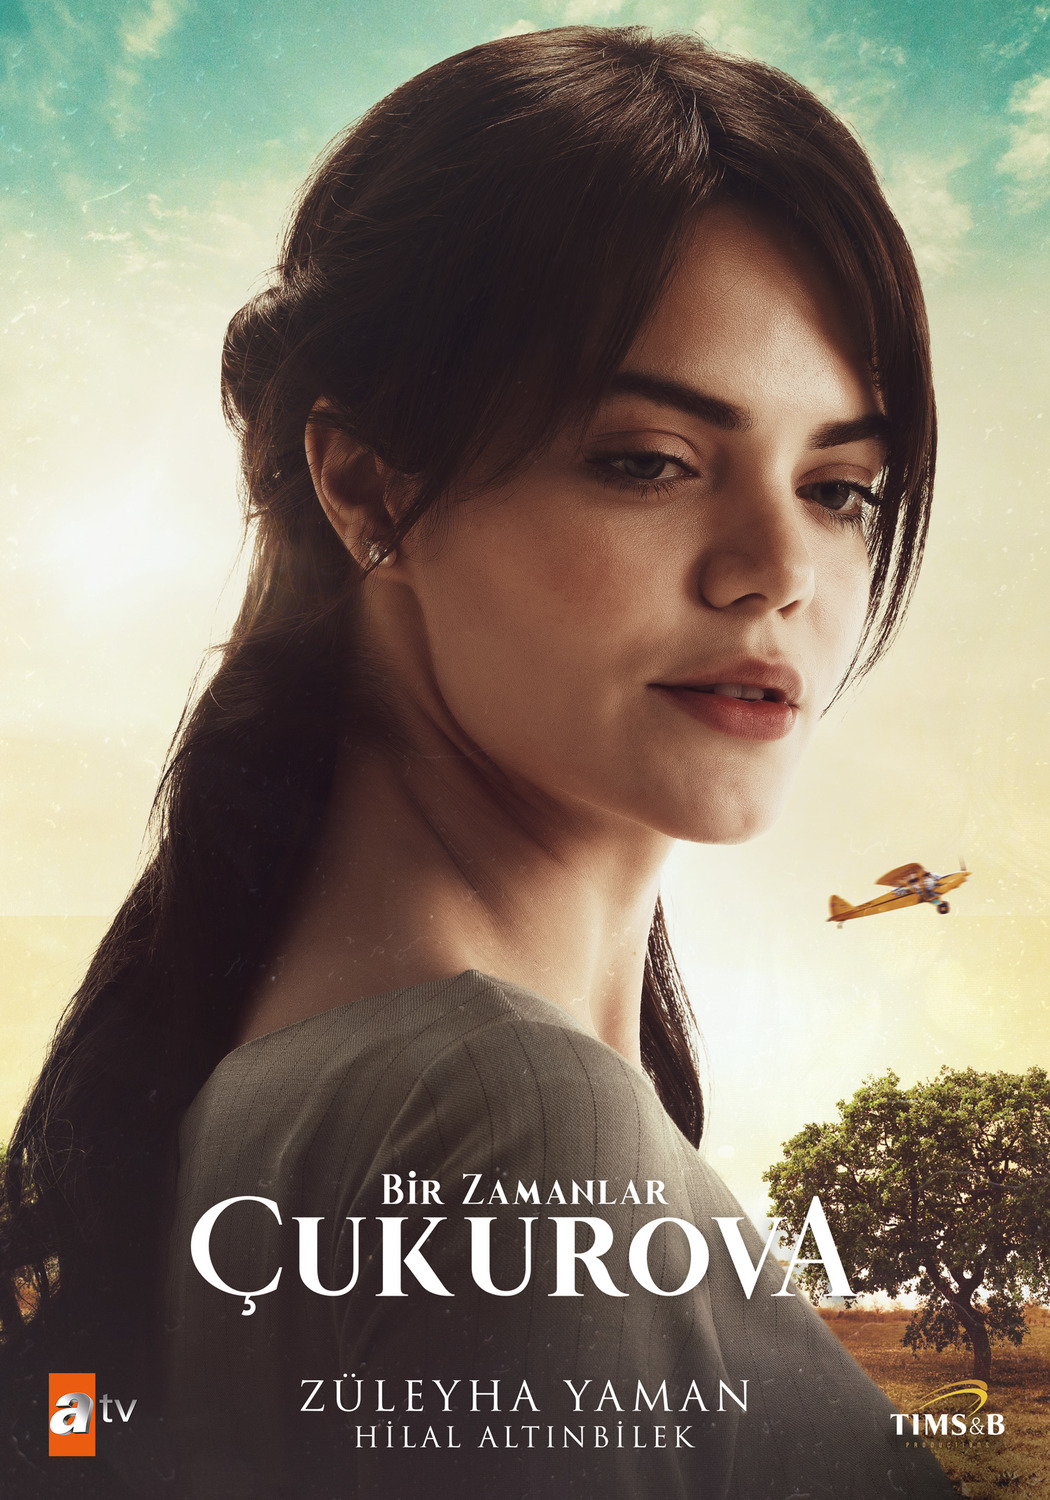 Extra Large TV Poster Image for Bir zamanlar Çukurova (#9 of 12)